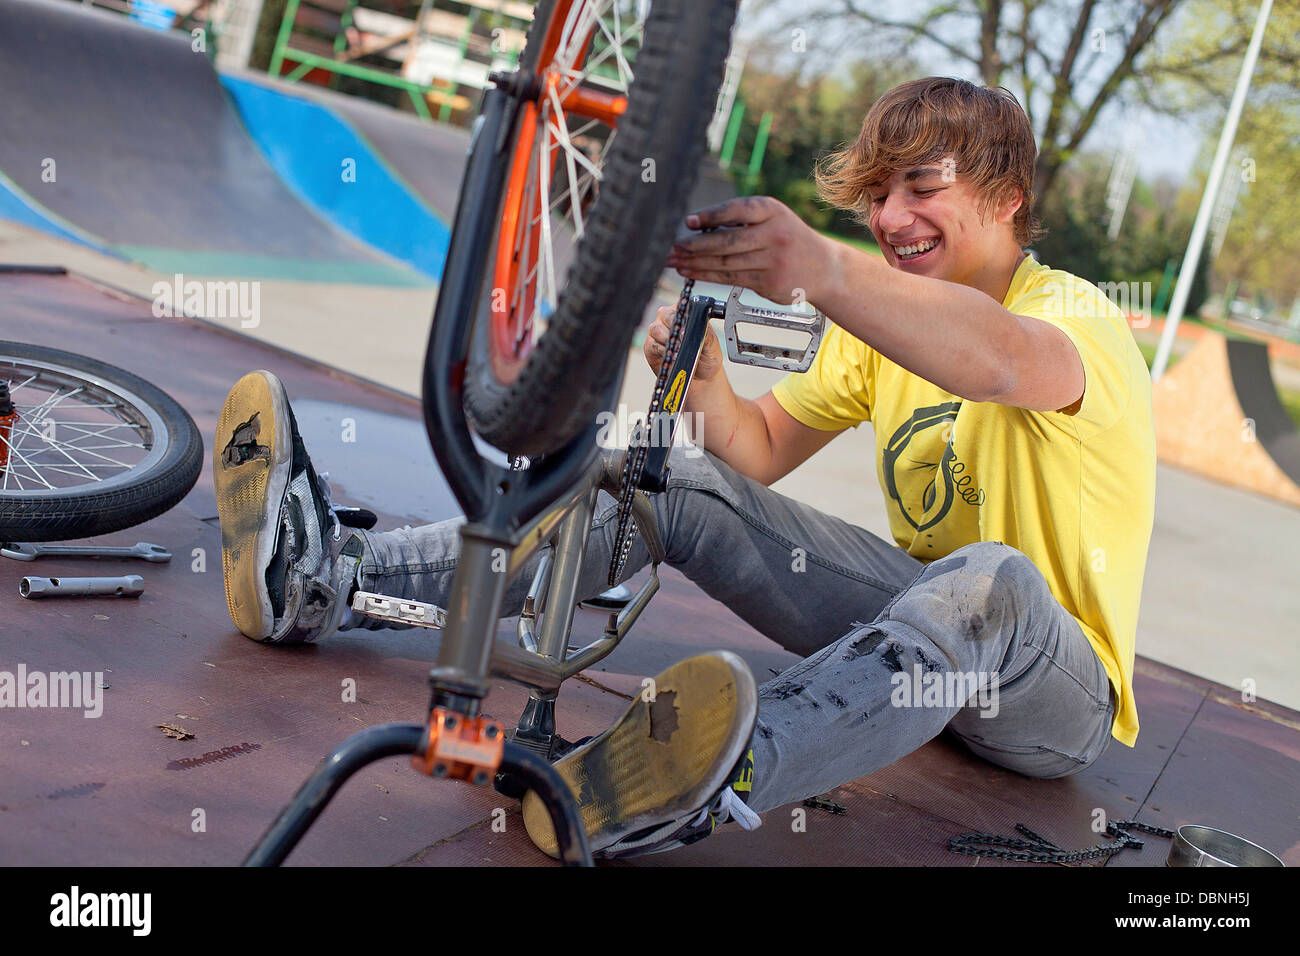 Teenager doing repair work on BMX bike 